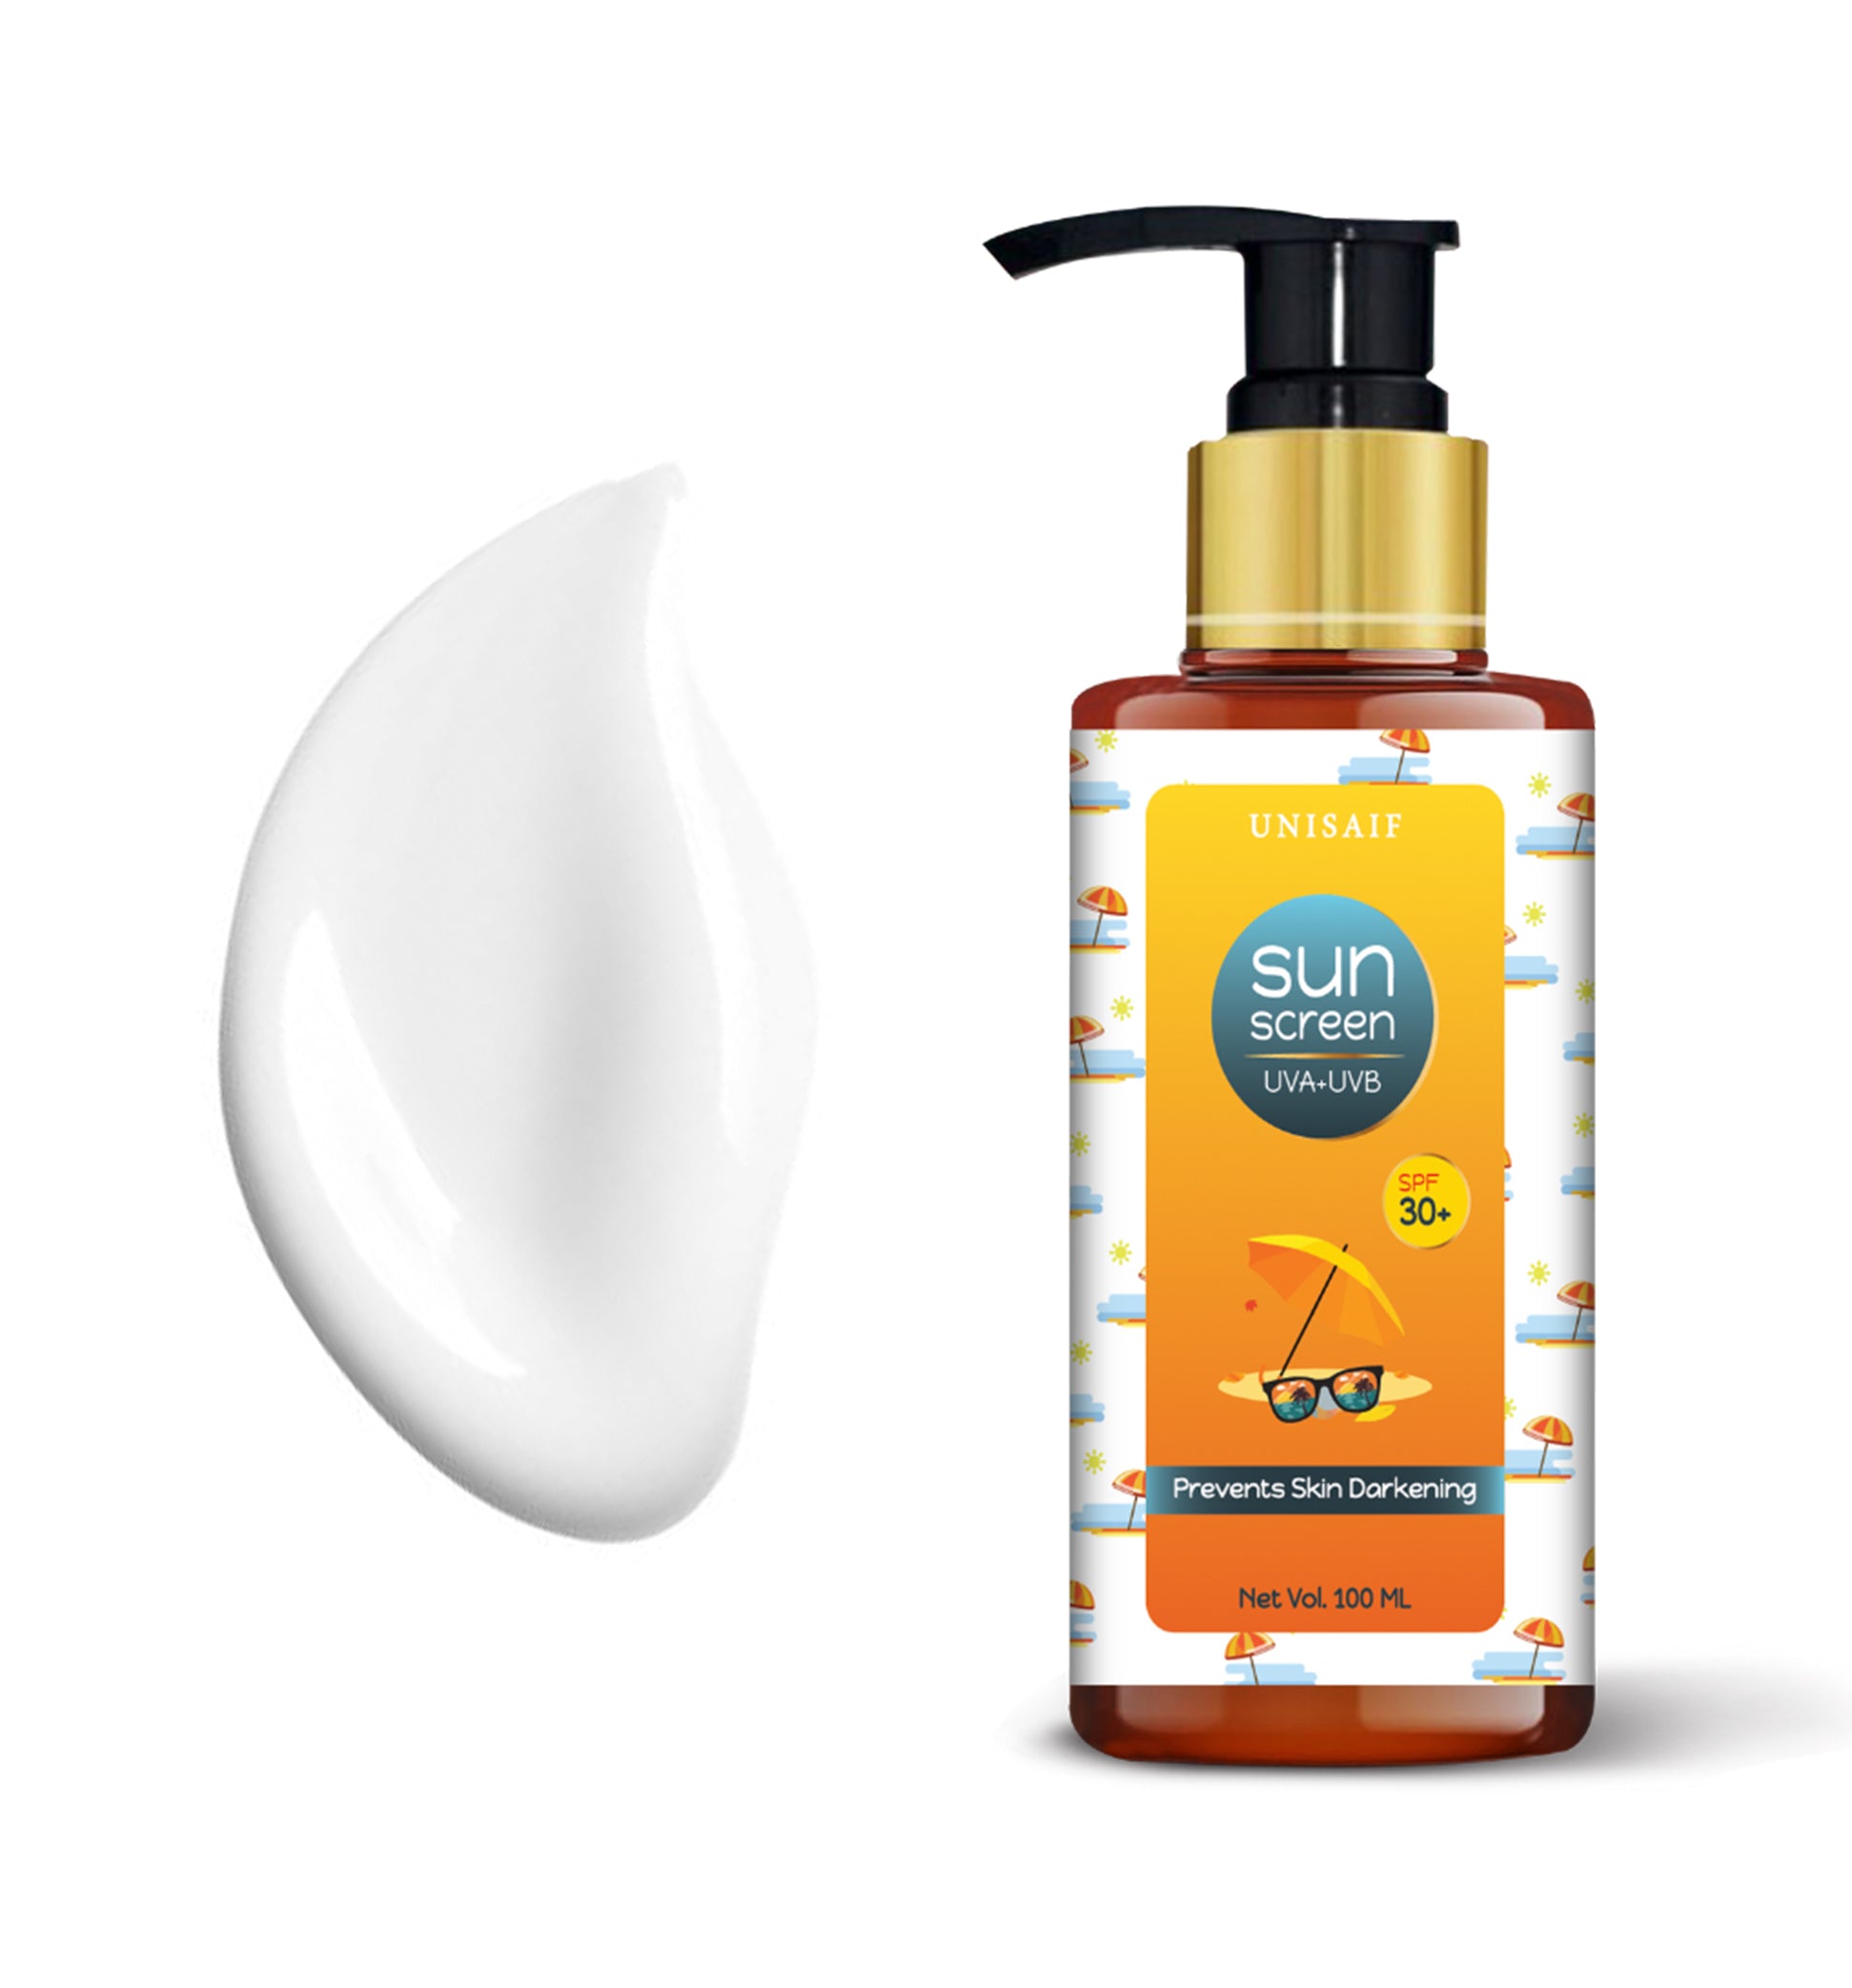 Sunscreen UVA-UVB Lotion 100ml **SPF 30+** – Unisaif